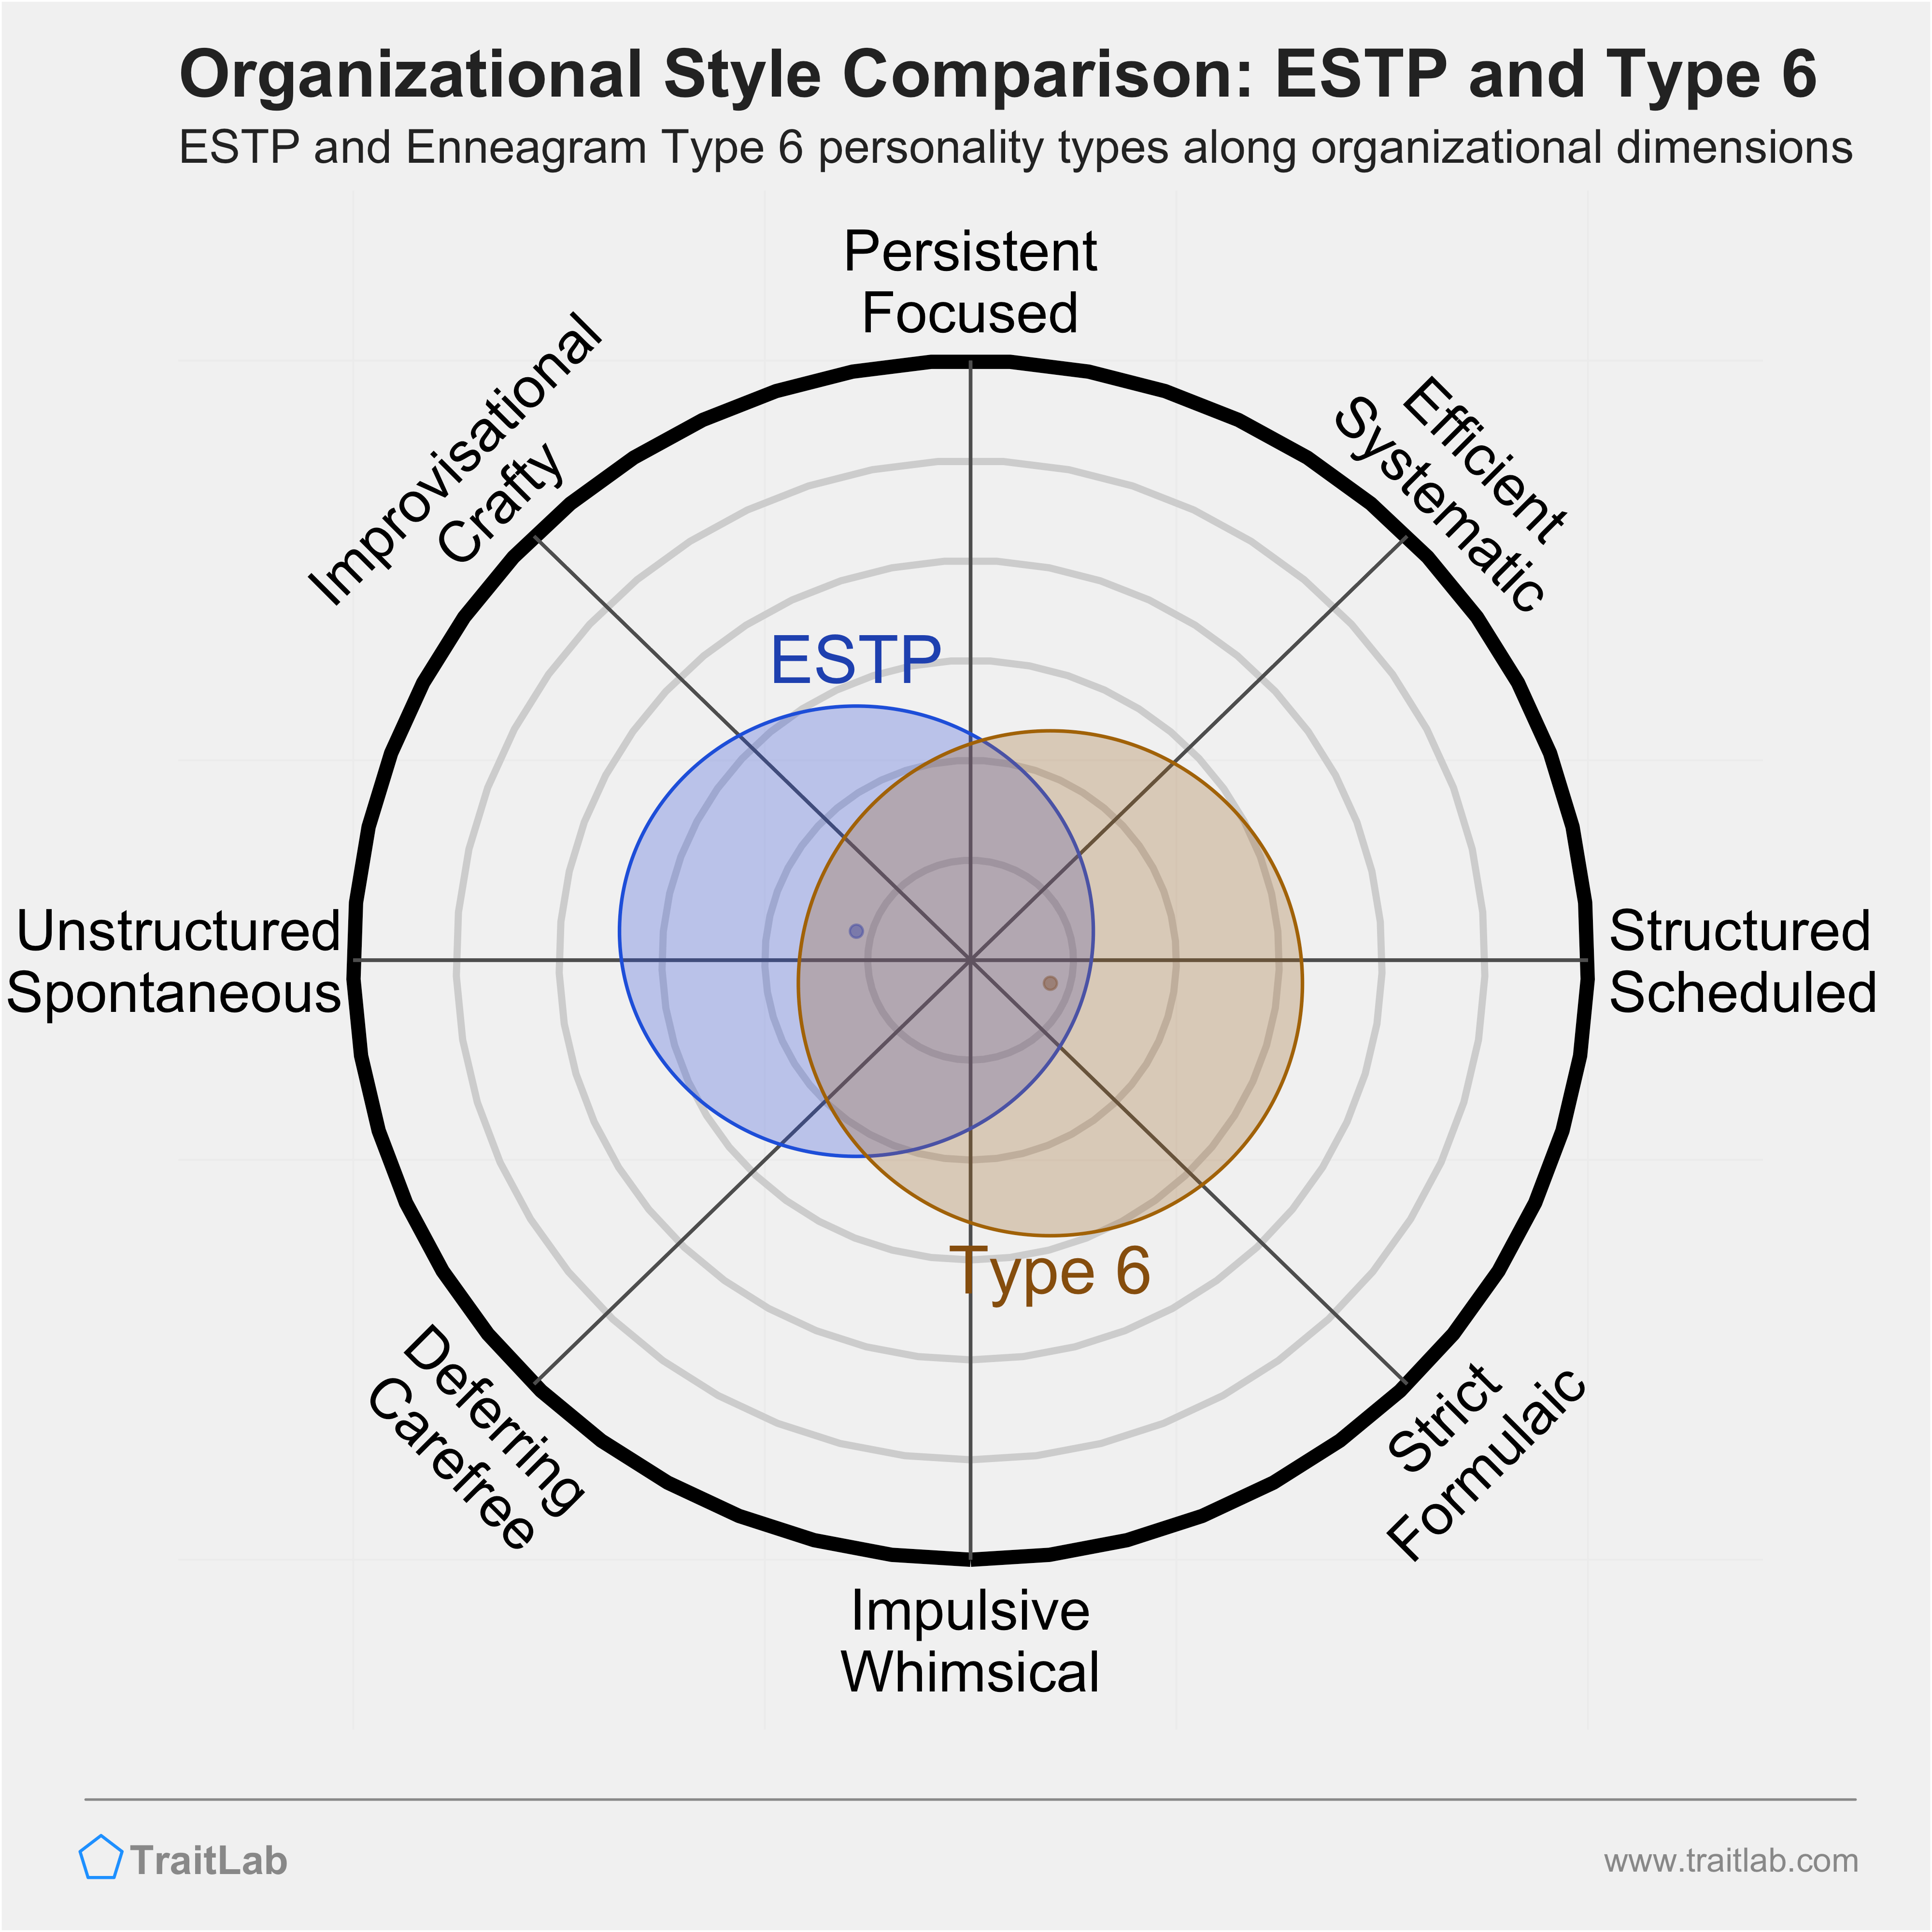 ESTP and Type 6 comparison across organizational dimensions